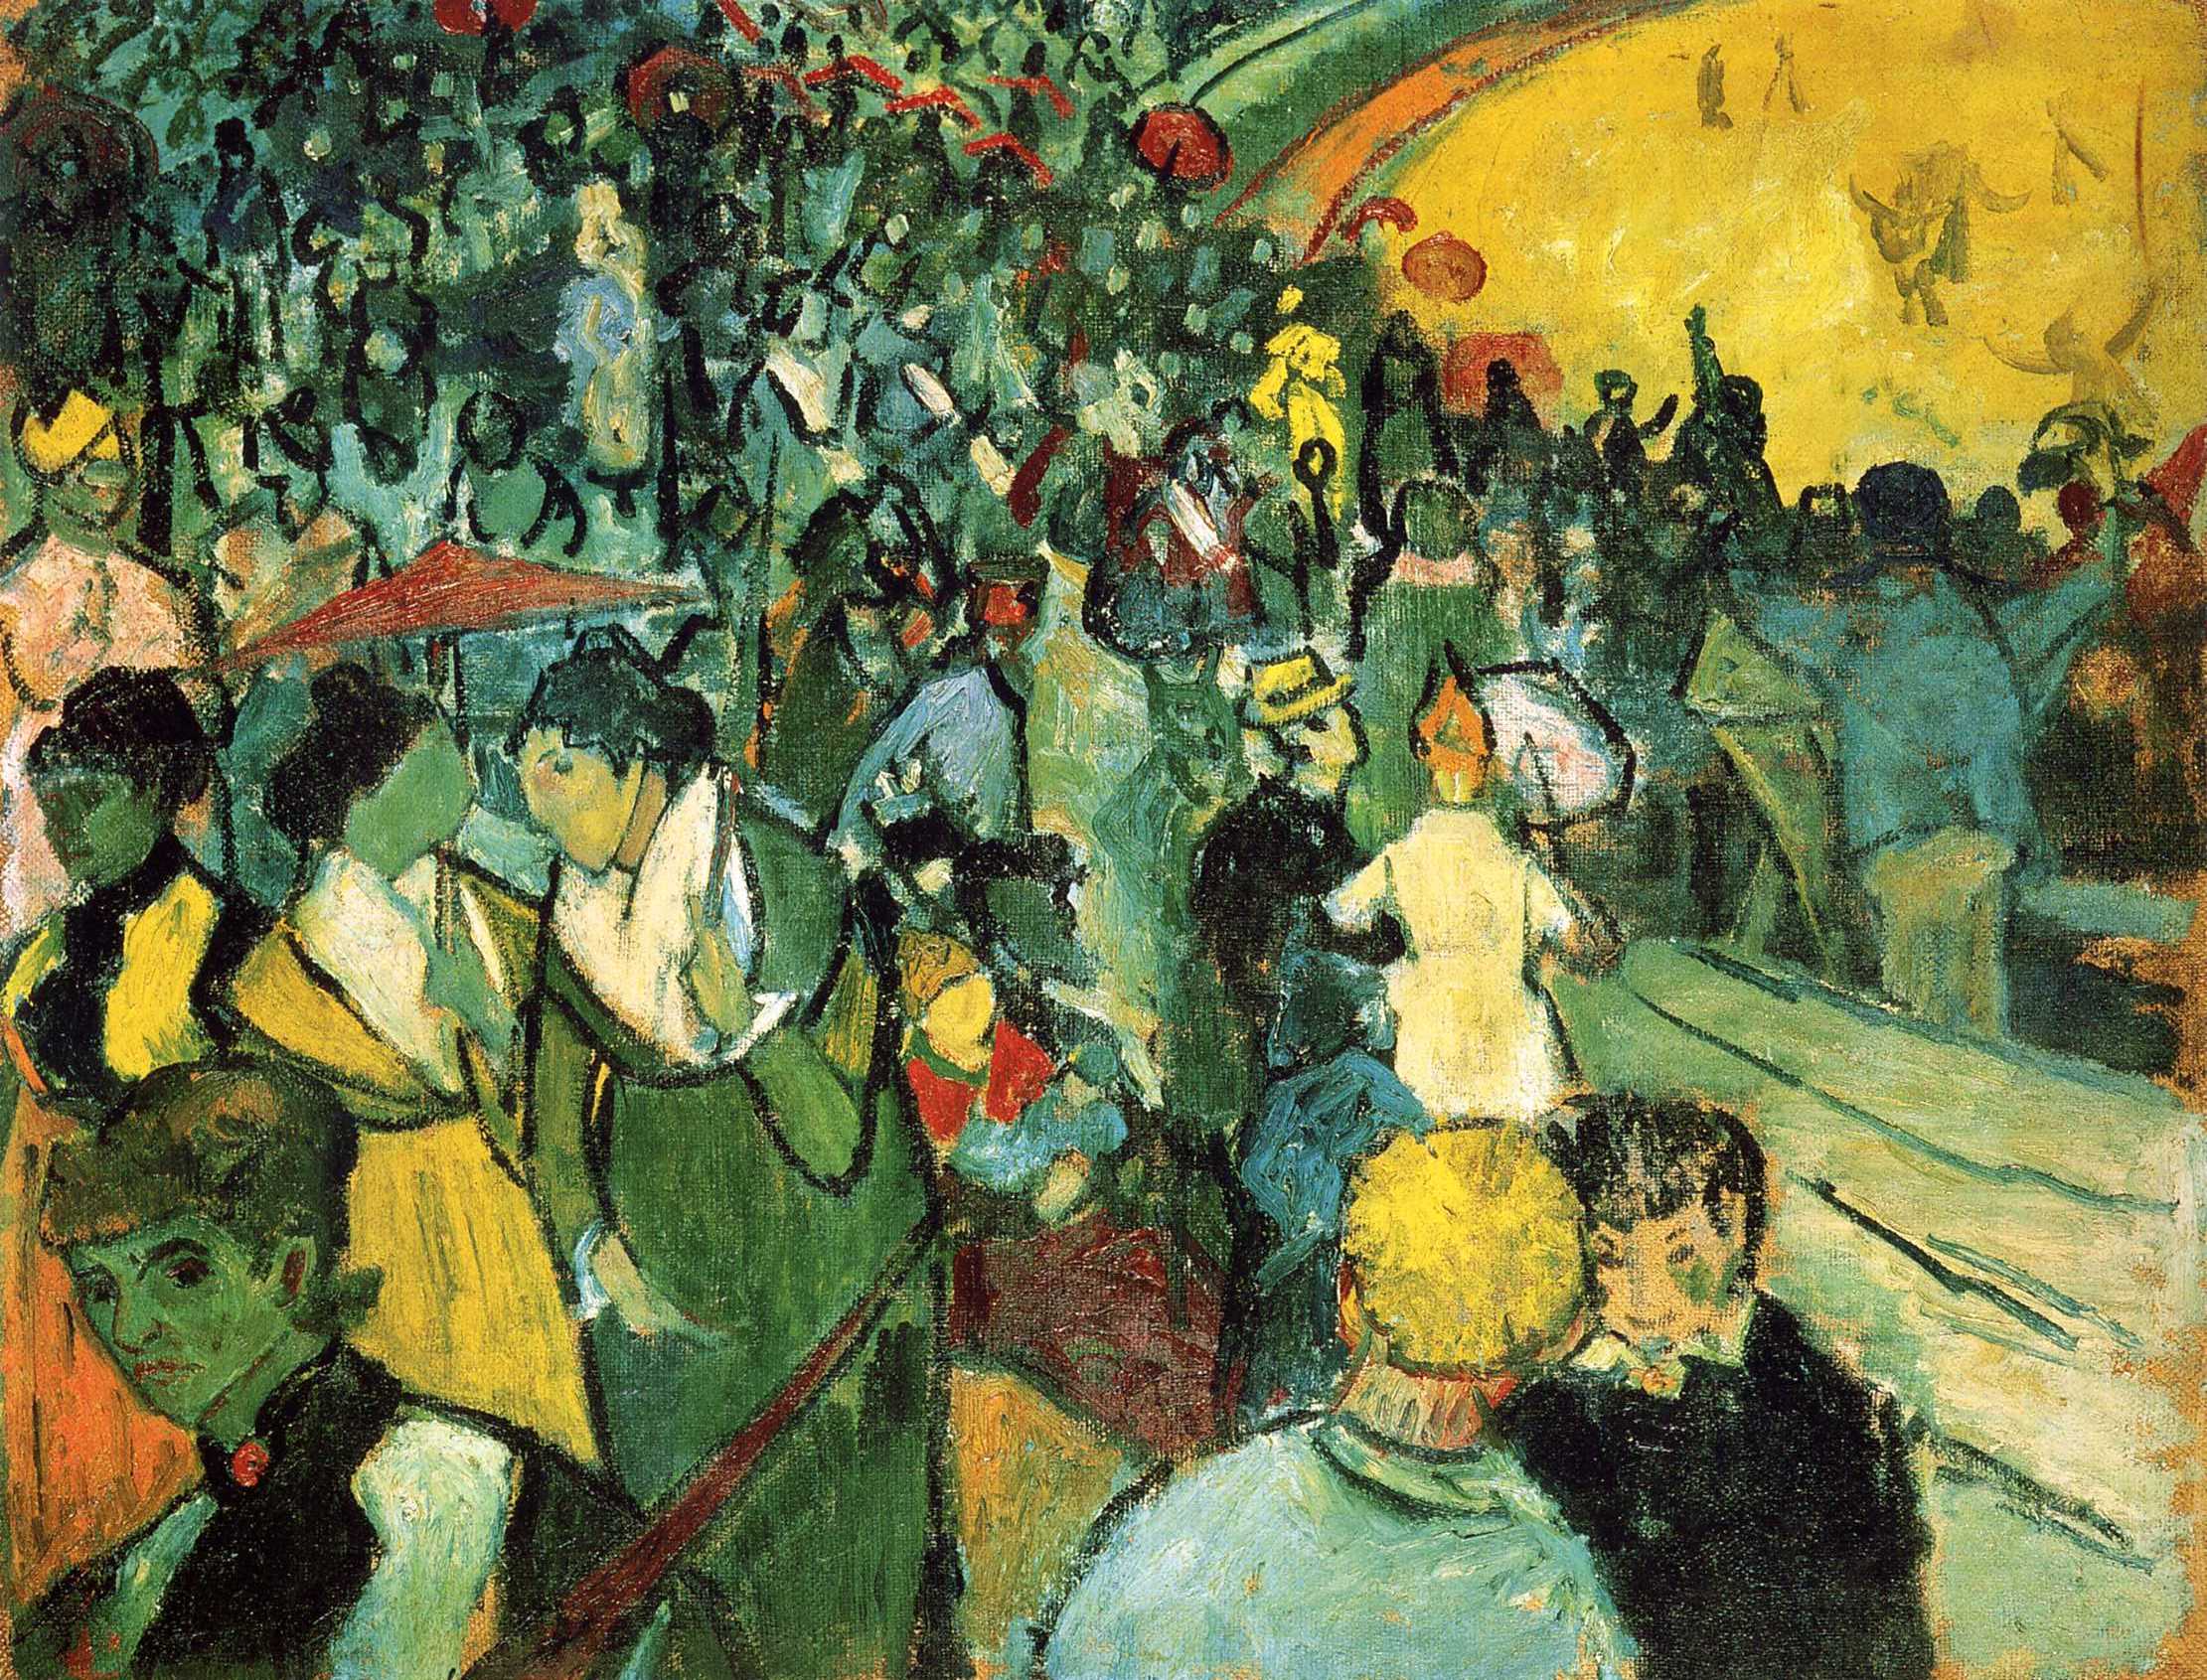 Spettatori nell'arena by Vincent van Gogh - 1888 - 73 x 92 cm 